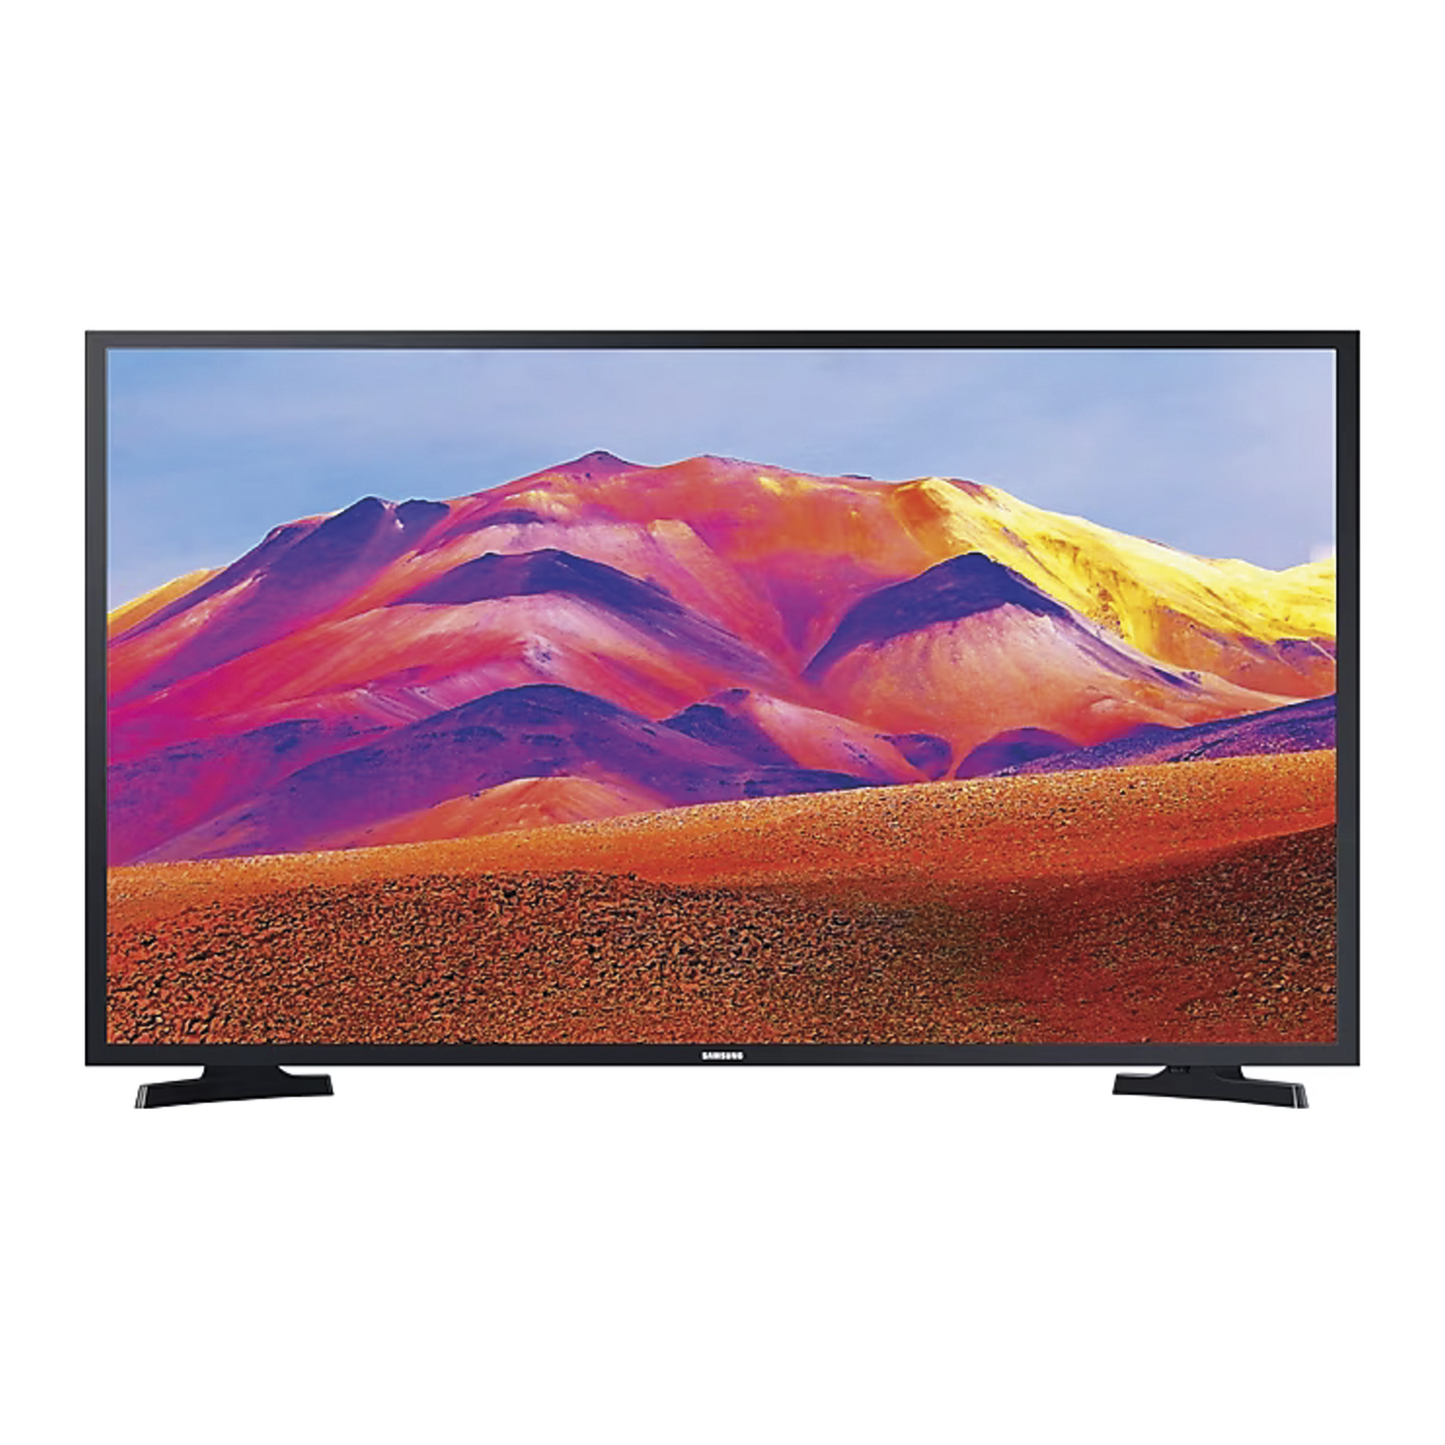 Smart TV 43" FullHD / Entradas de Video HDMI / Bocinas Integradas de 10 W / Compatible con VESA / Ideal para uso comercial o residencial.